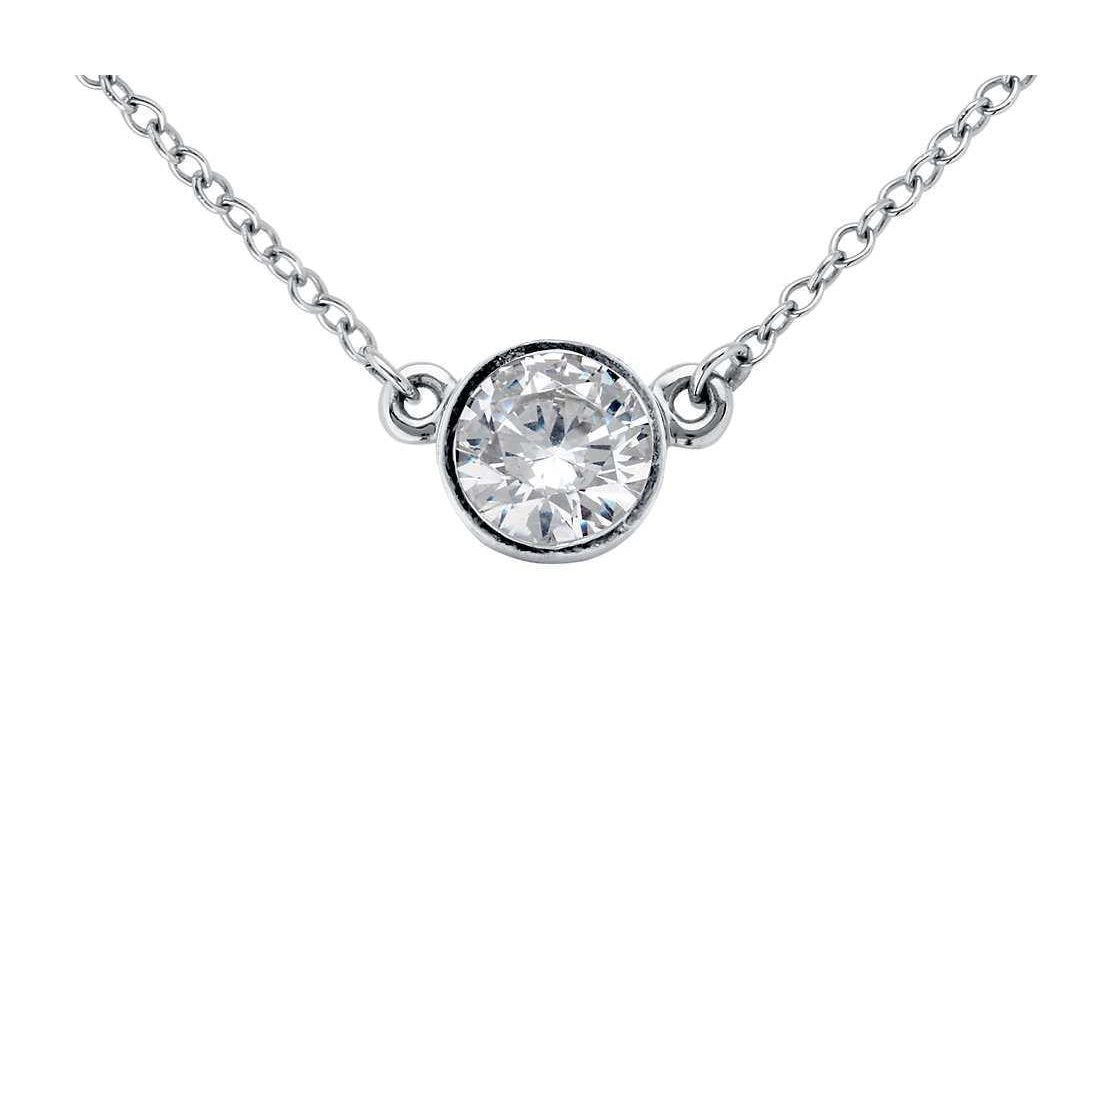 Sparkling Solitaire 1 Ct. Genuine Diamond Pendant Necklace White Gold 14K